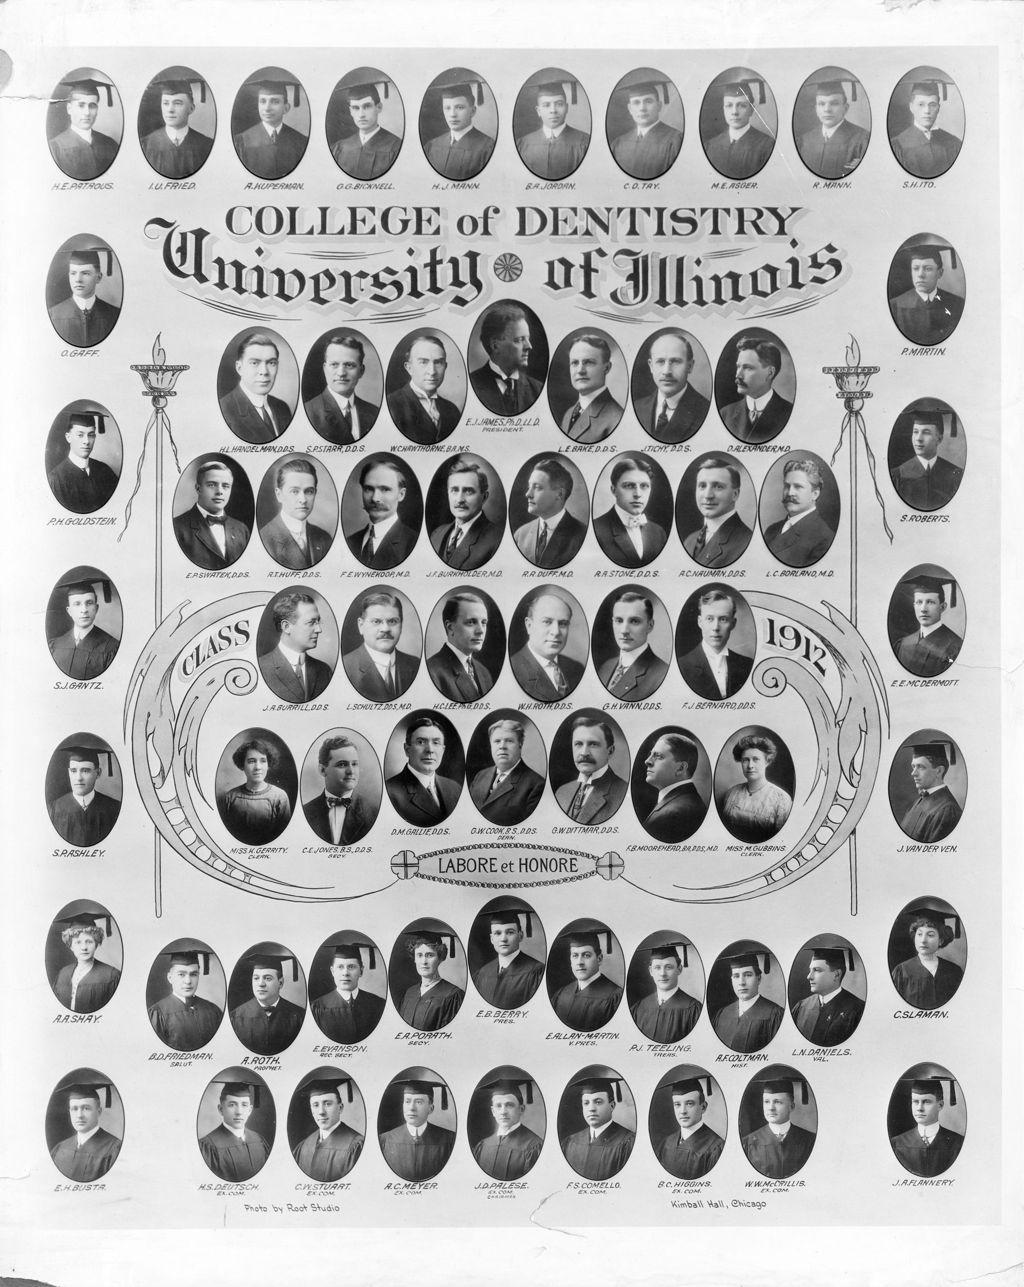 1912 graduating class, University of Illinois College of Dentistry